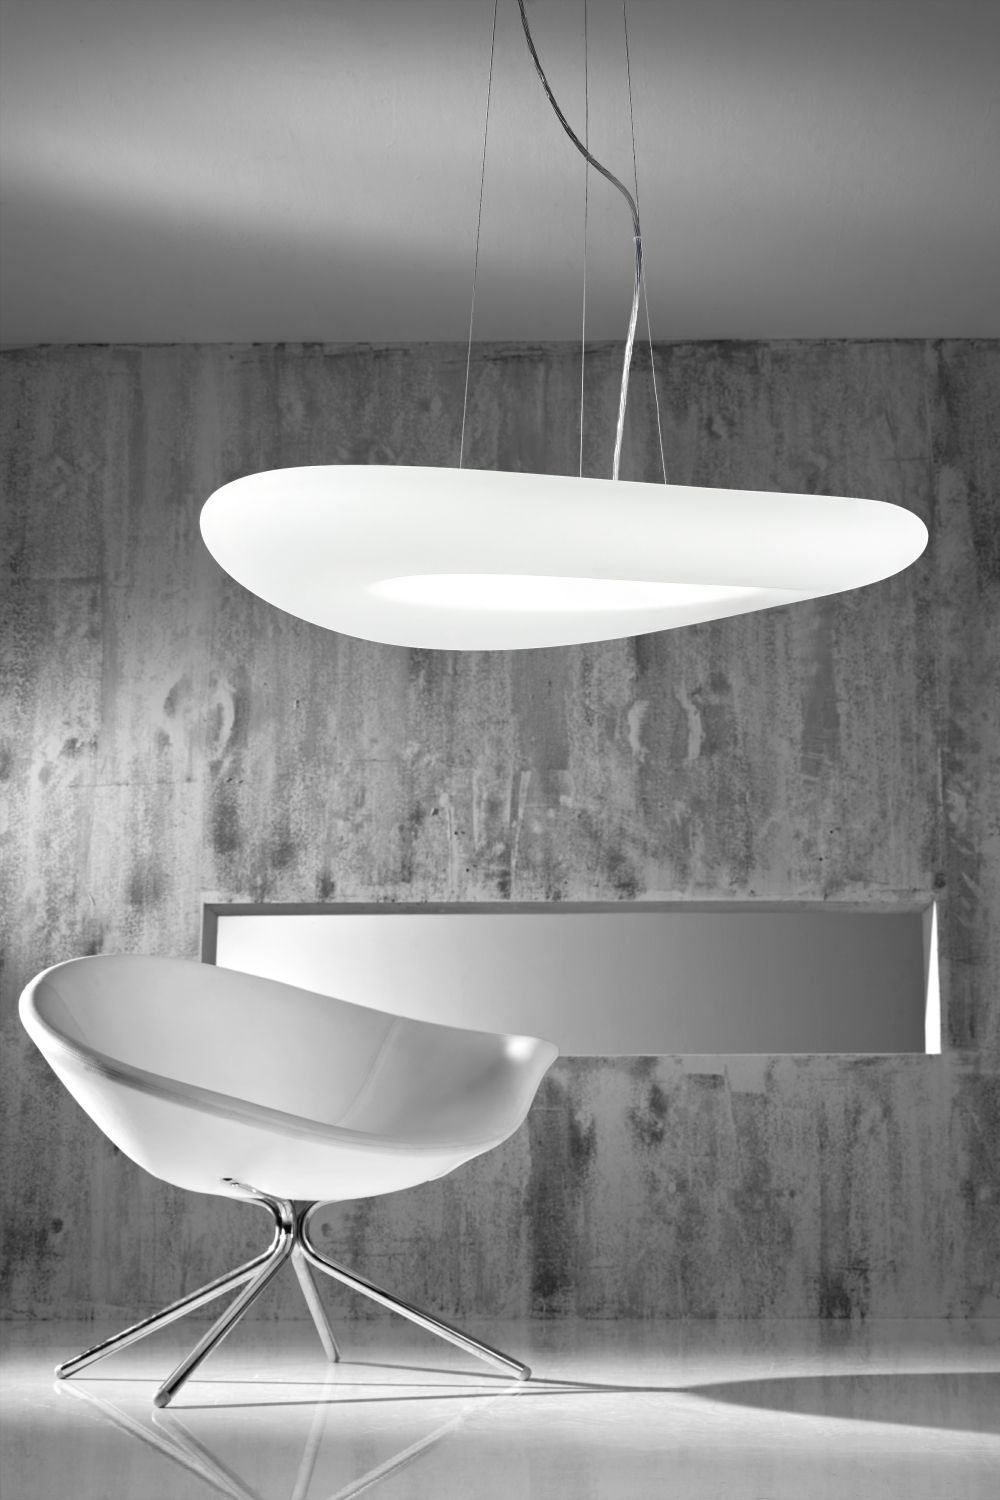 Italian lighting for a new home